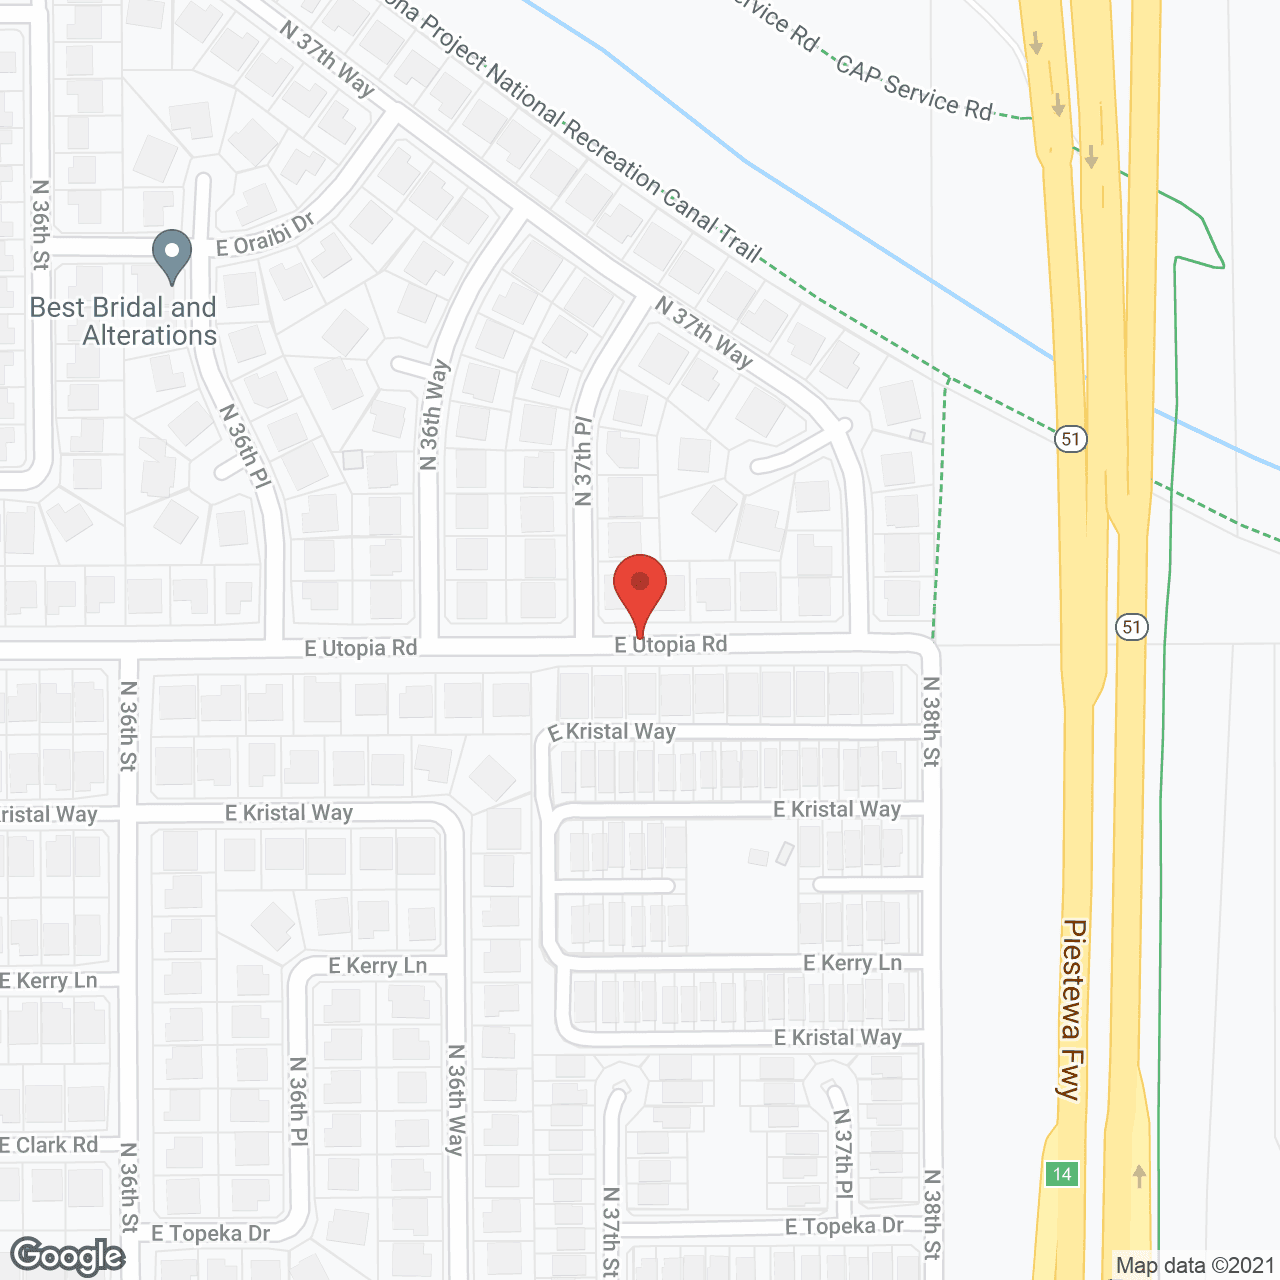 Tatum Glen Adult Care Home in google map